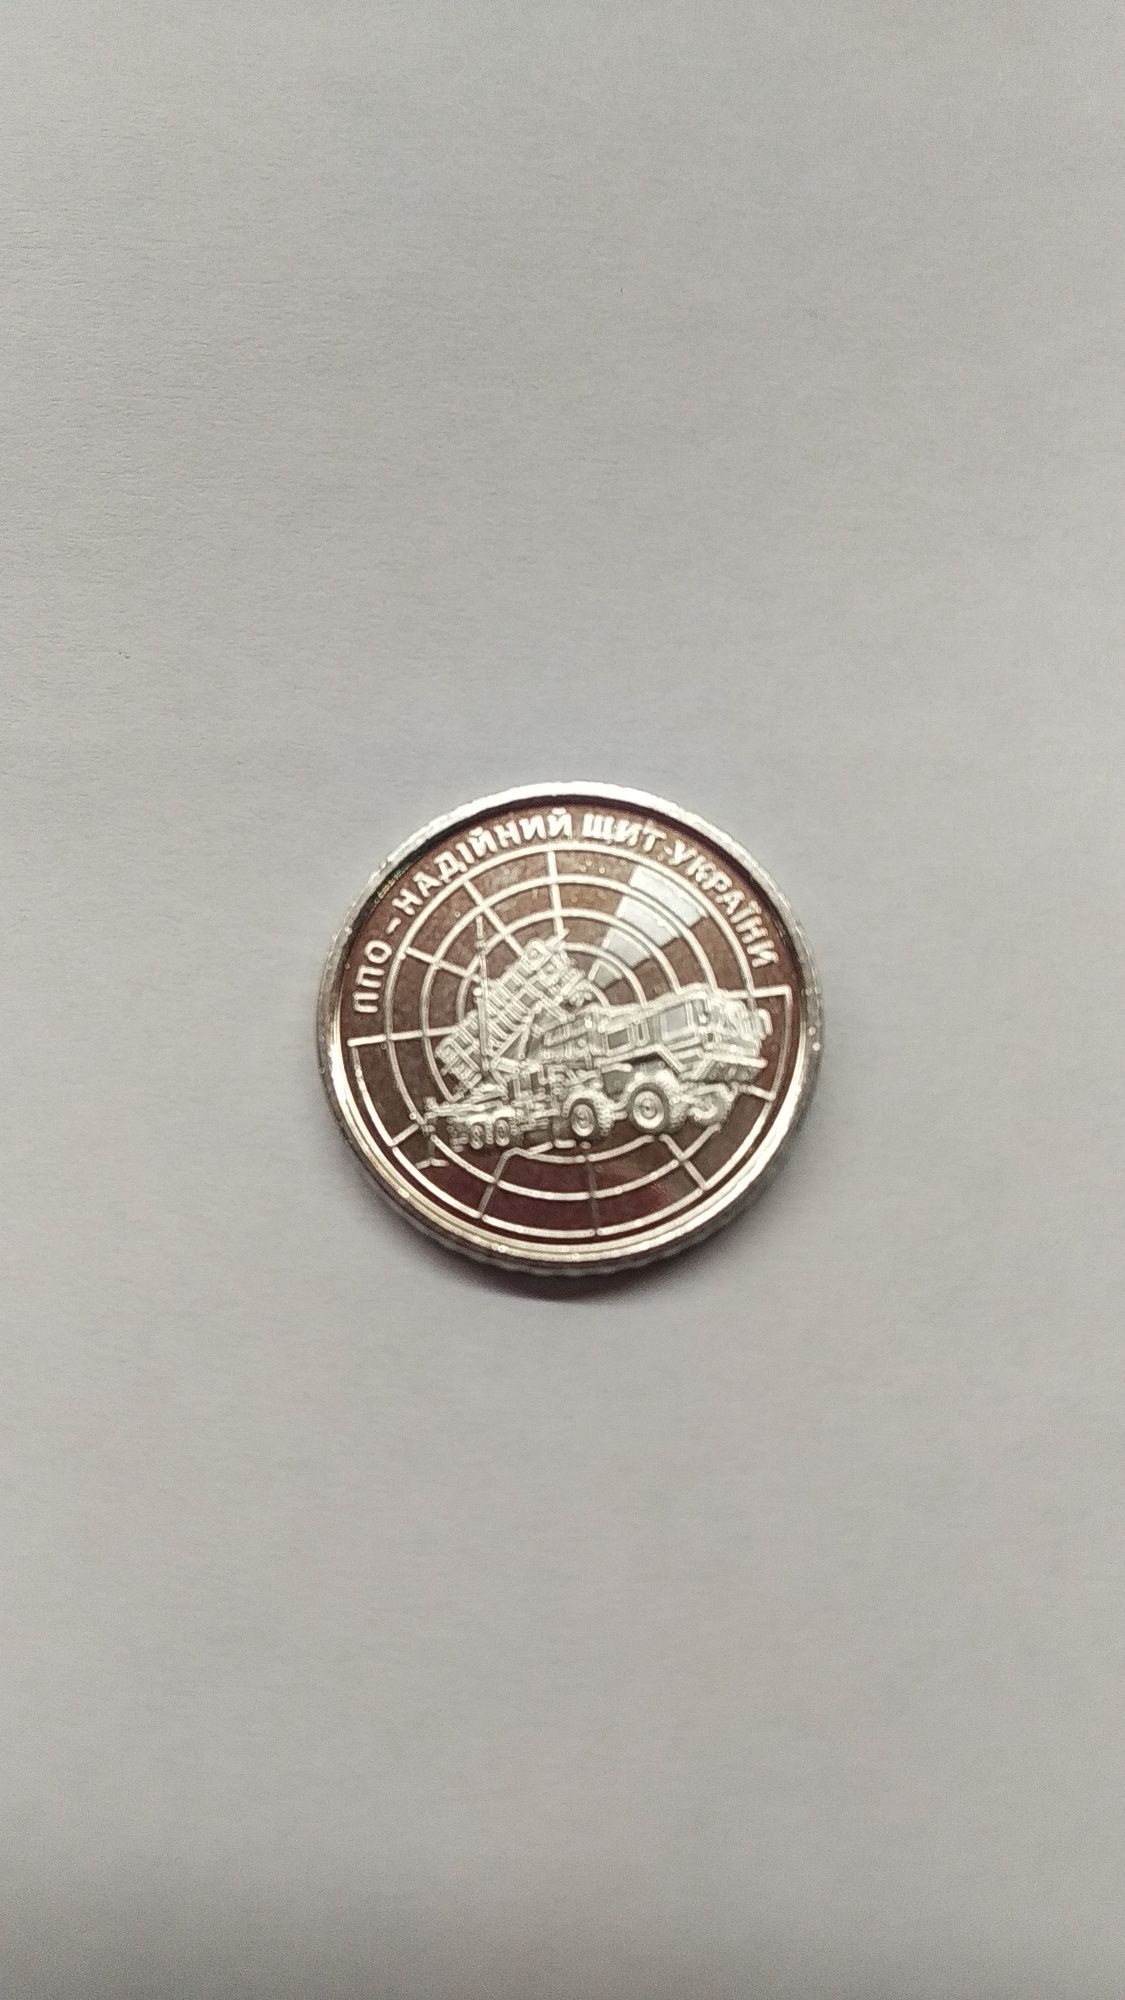 Монета ППО-надійний щит України